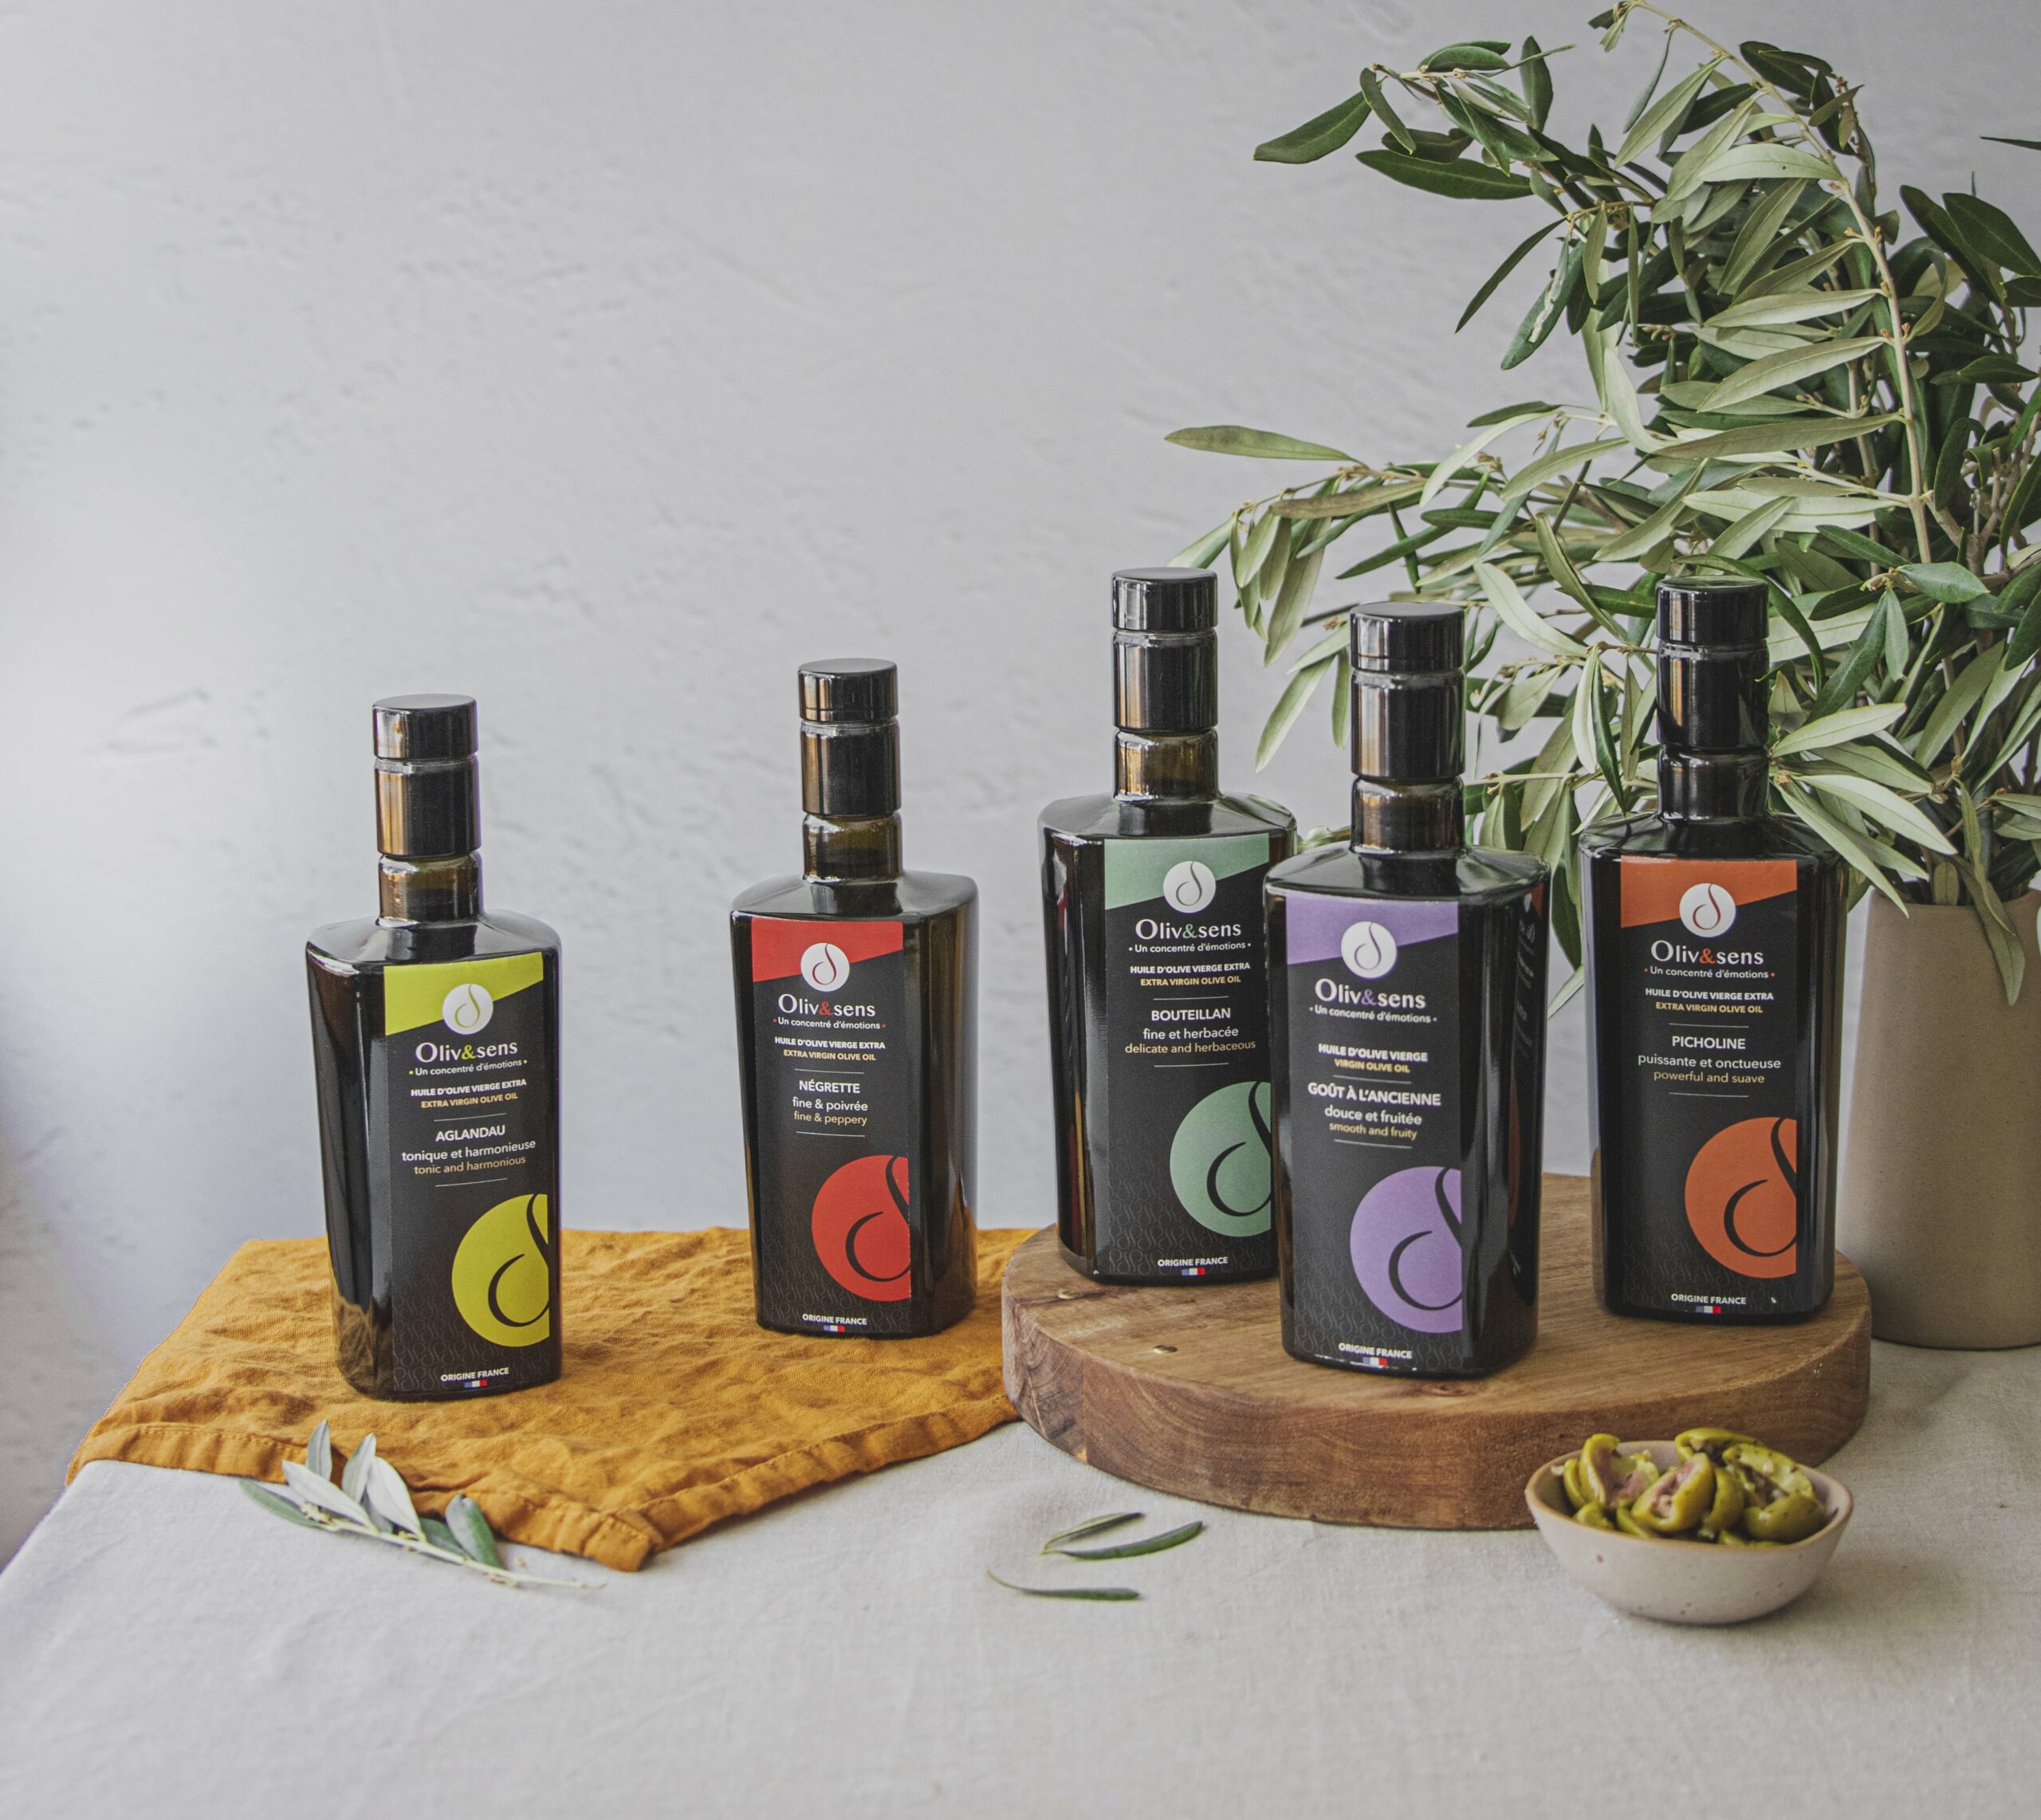 Gamme huiles d'olive Oliv&sens